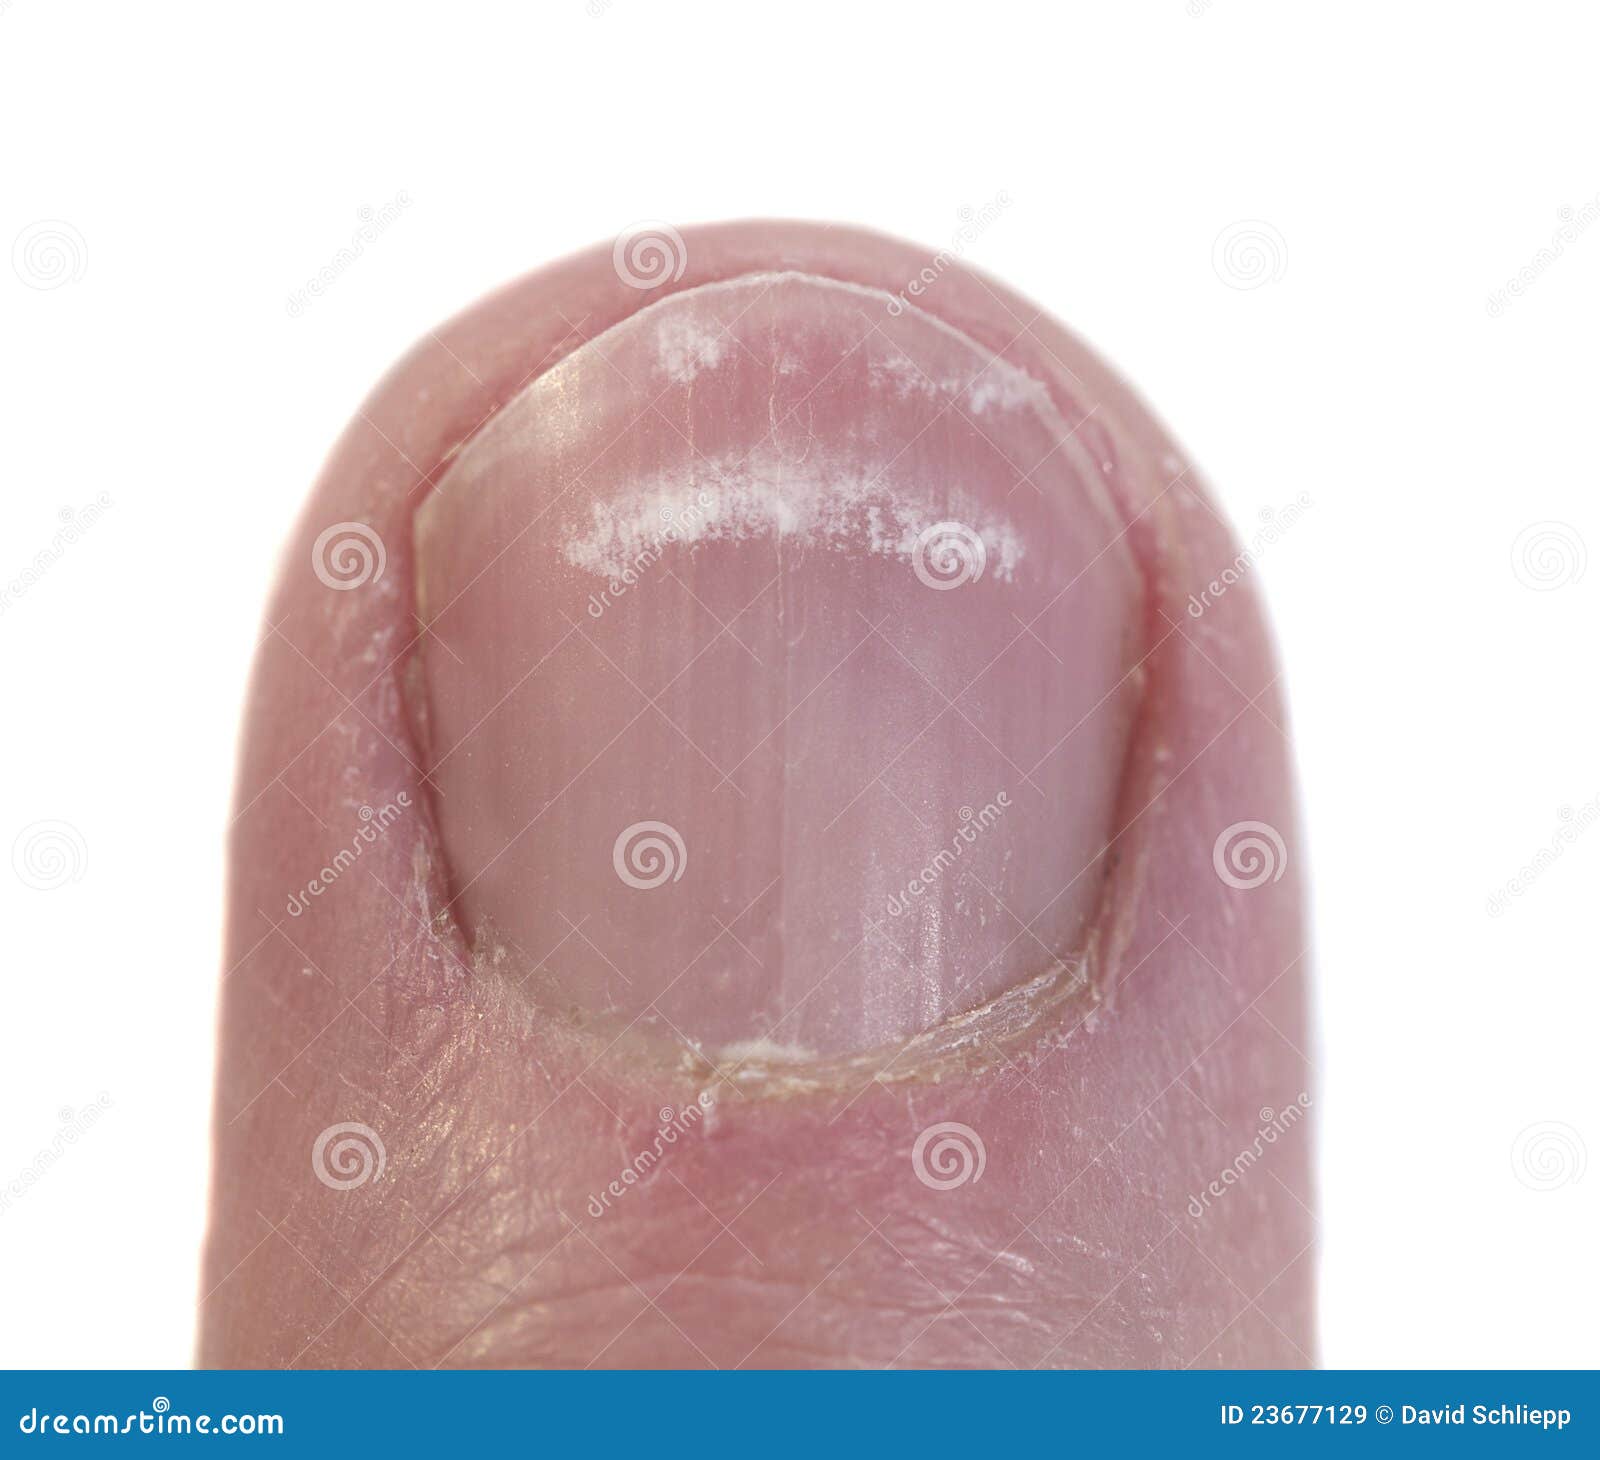 macro of a fingernail with leukonychia